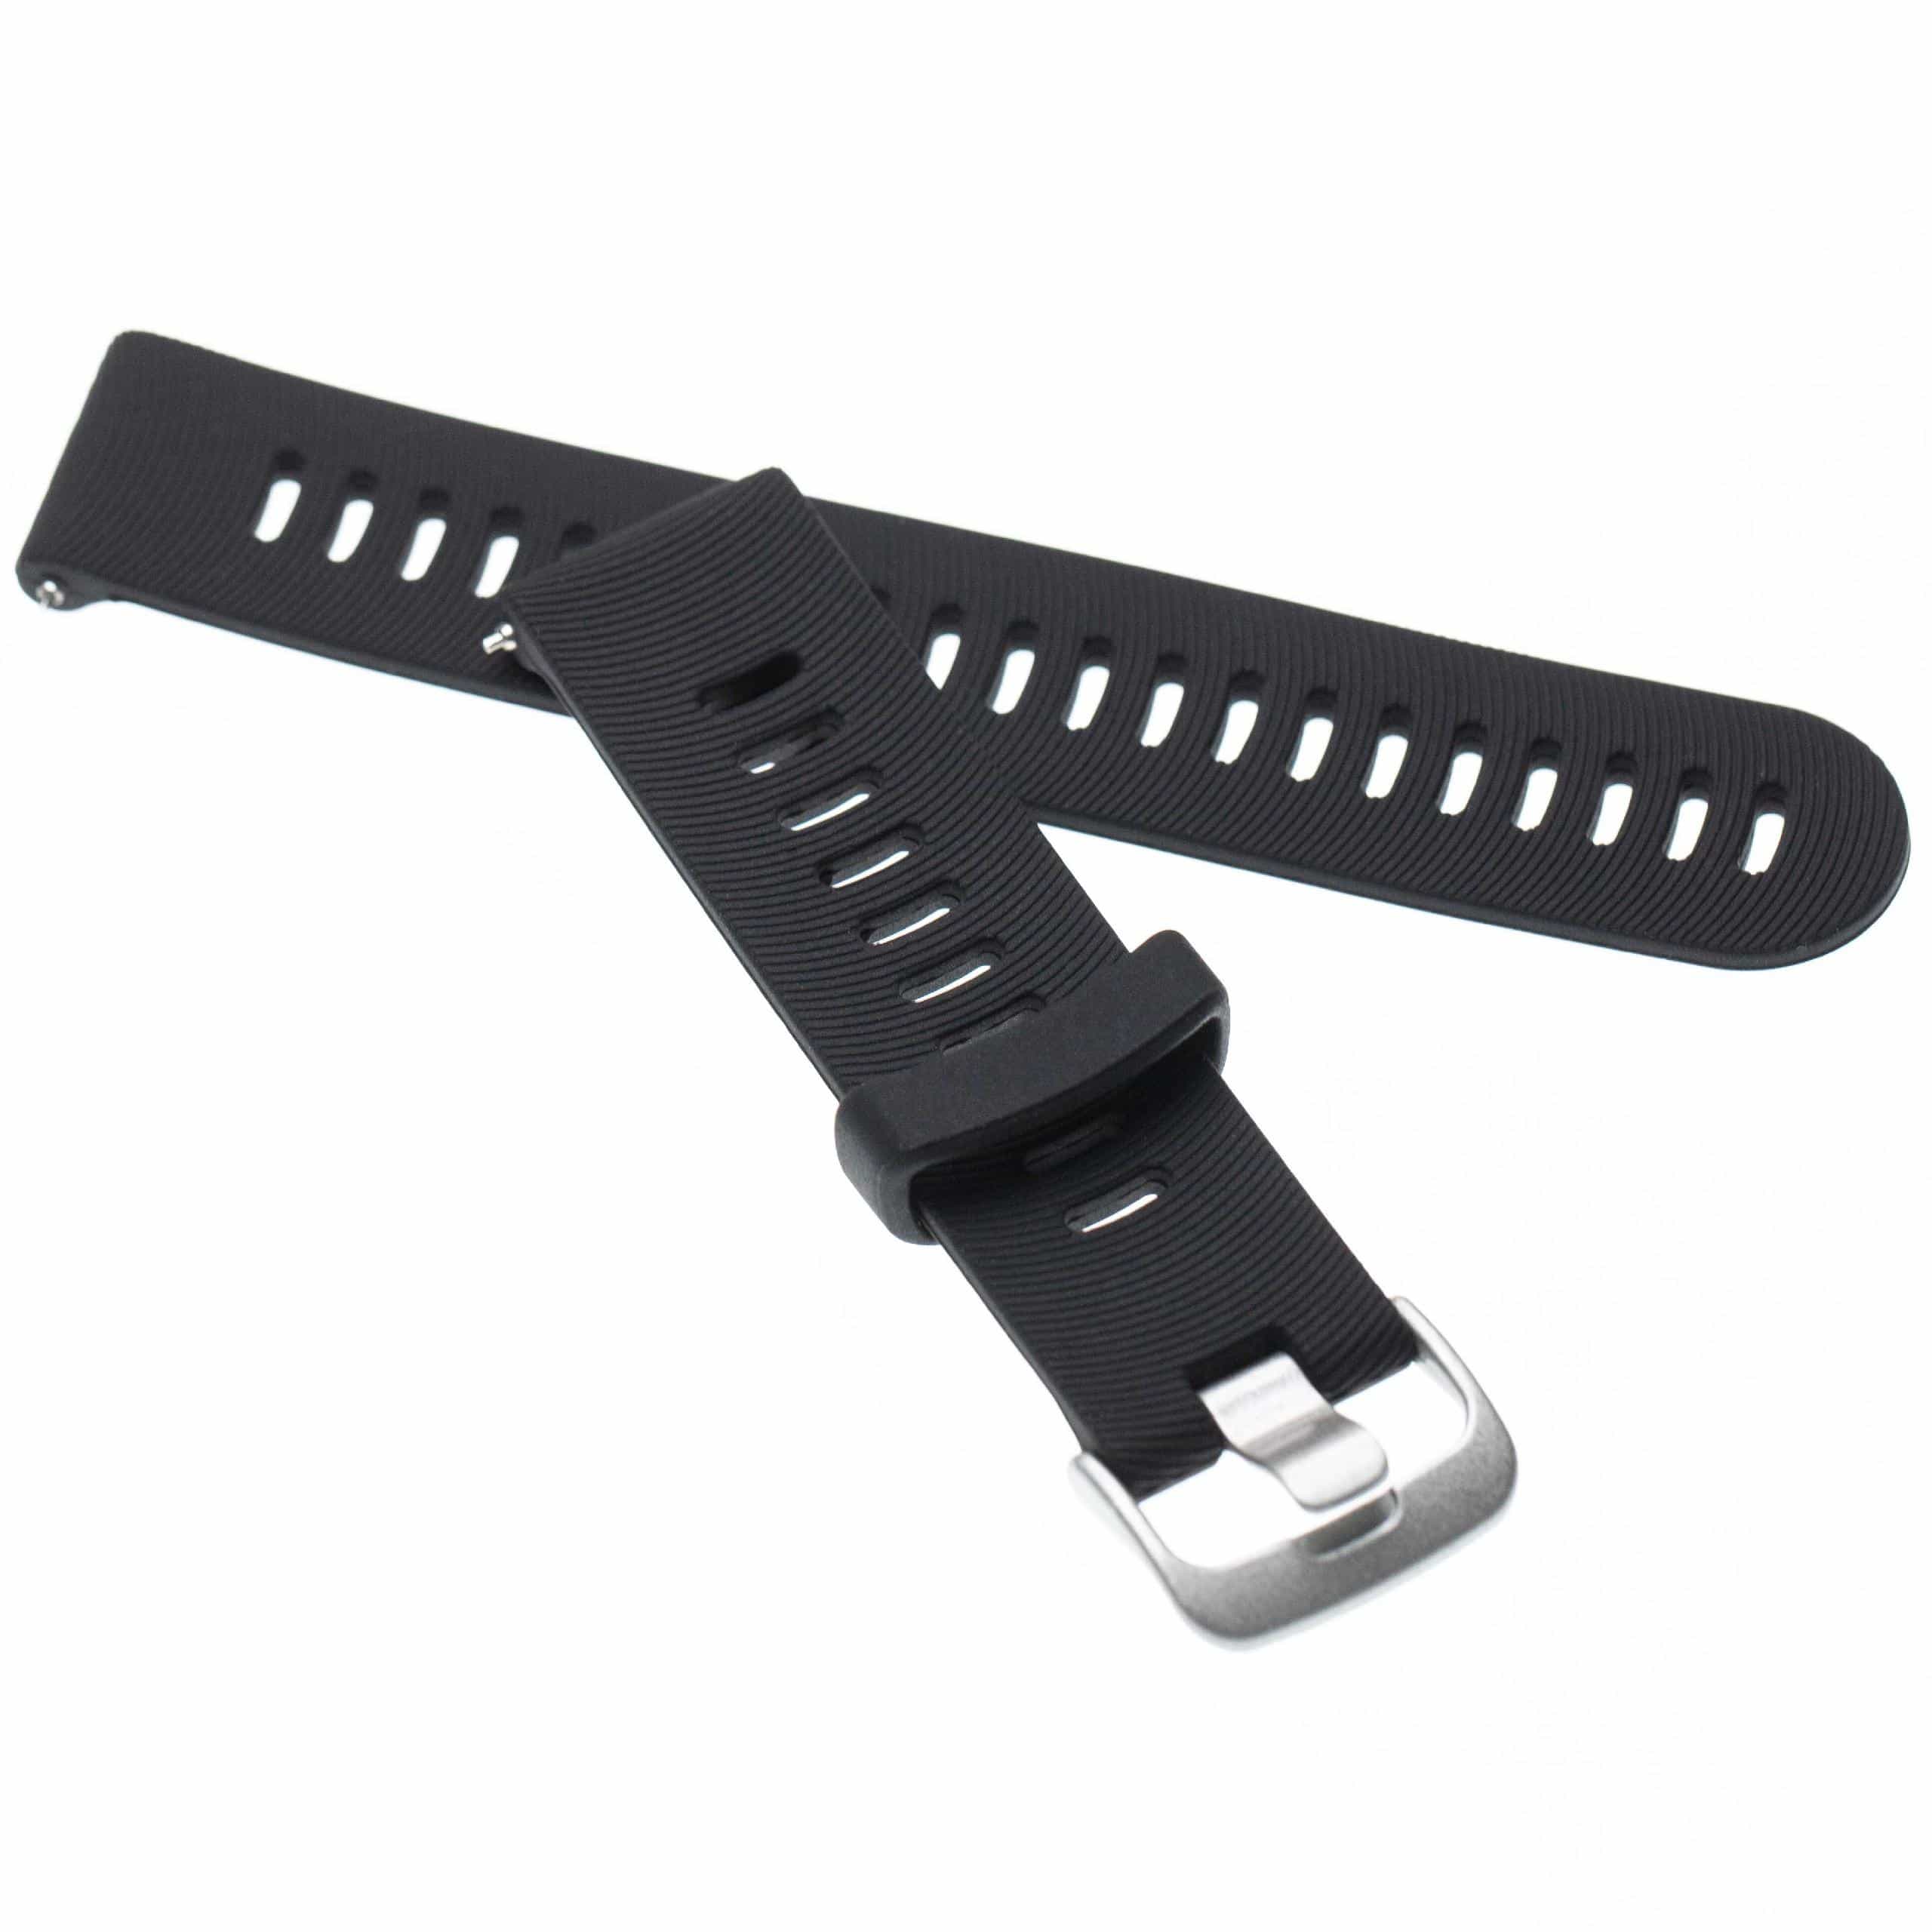 cinturino per Garmin Forerunner Smartwatch - 11 + 8,5 cm lunghezza, silicone, nero